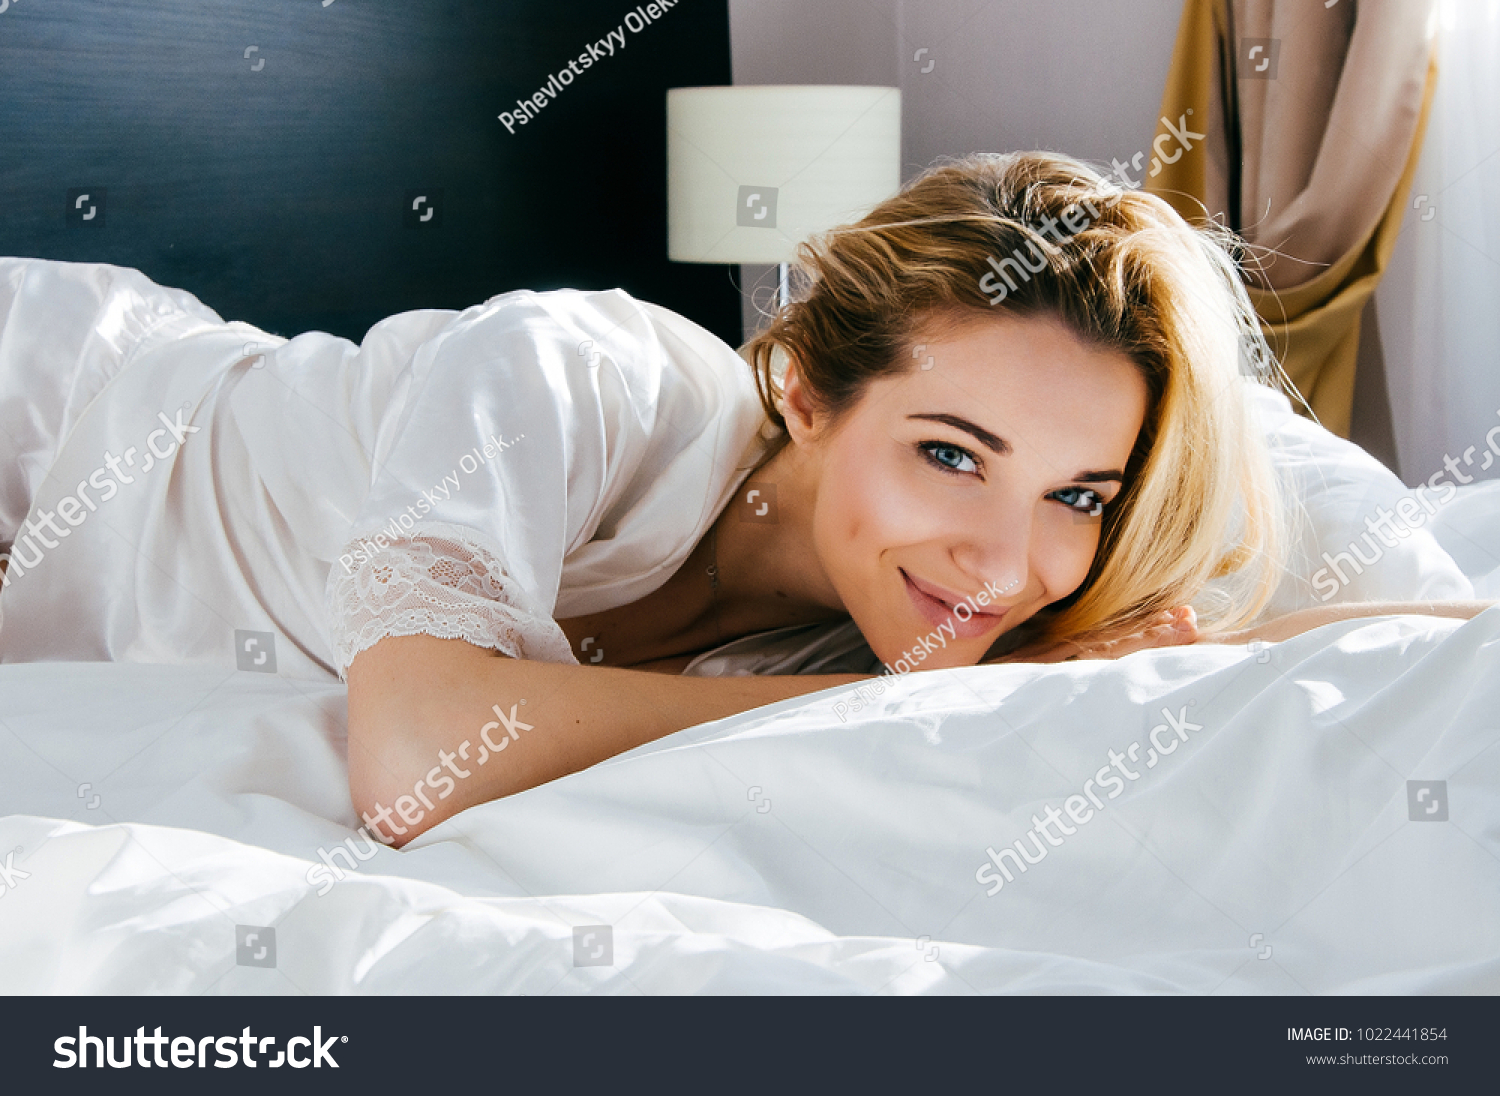 910 張 Sexual Blond Woman Lying Naked In Bed 圖片、庫存照片和向量圖 Shutterstock